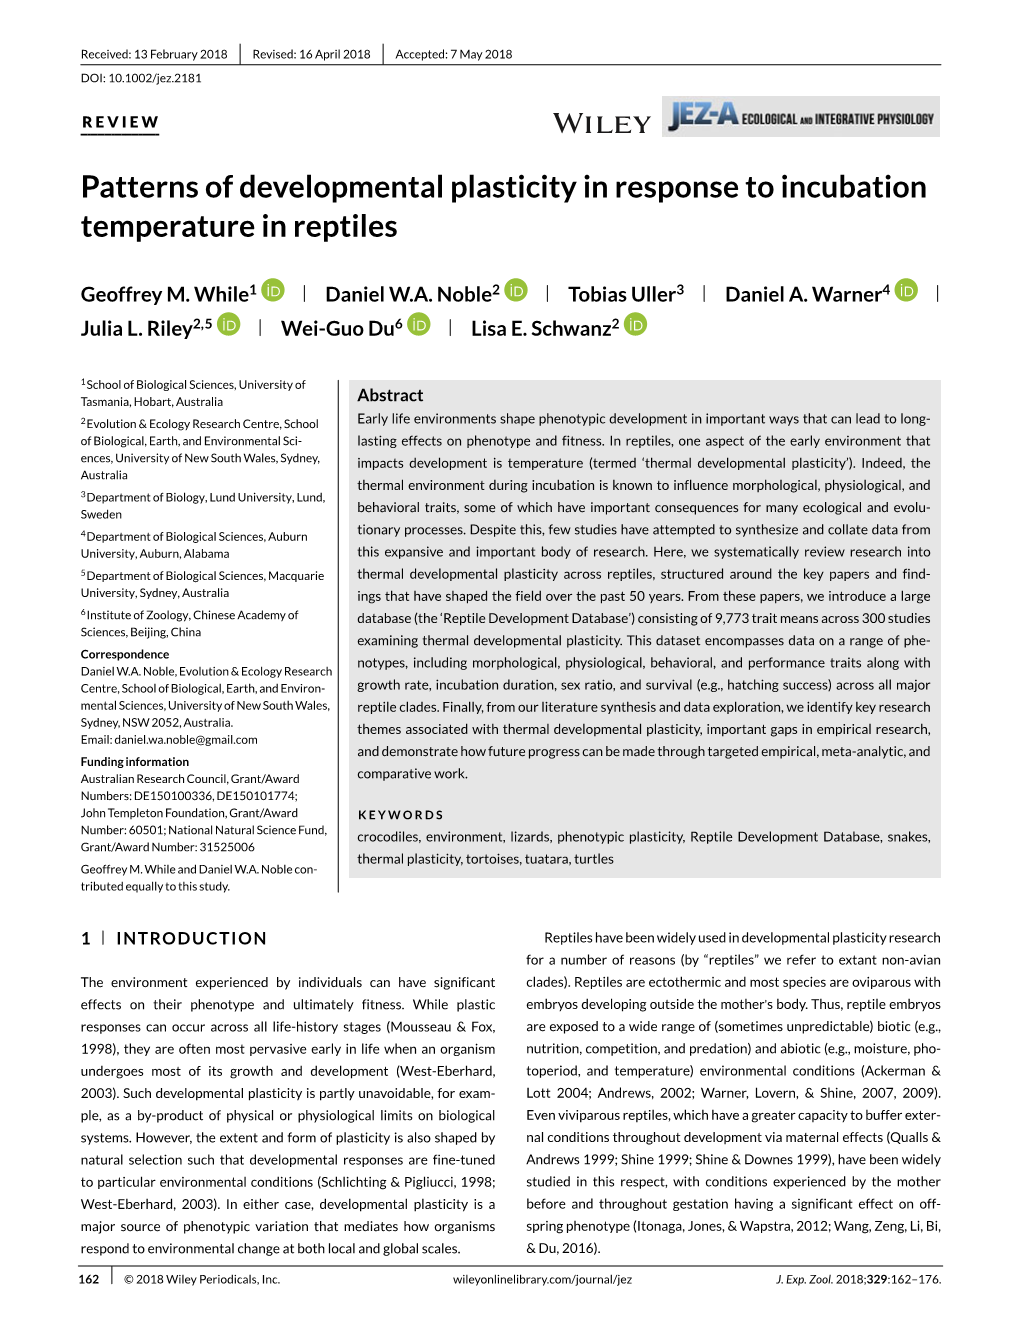 Patterns of Developmental Plasticity in Response to Incubation Temperature in Reptiles